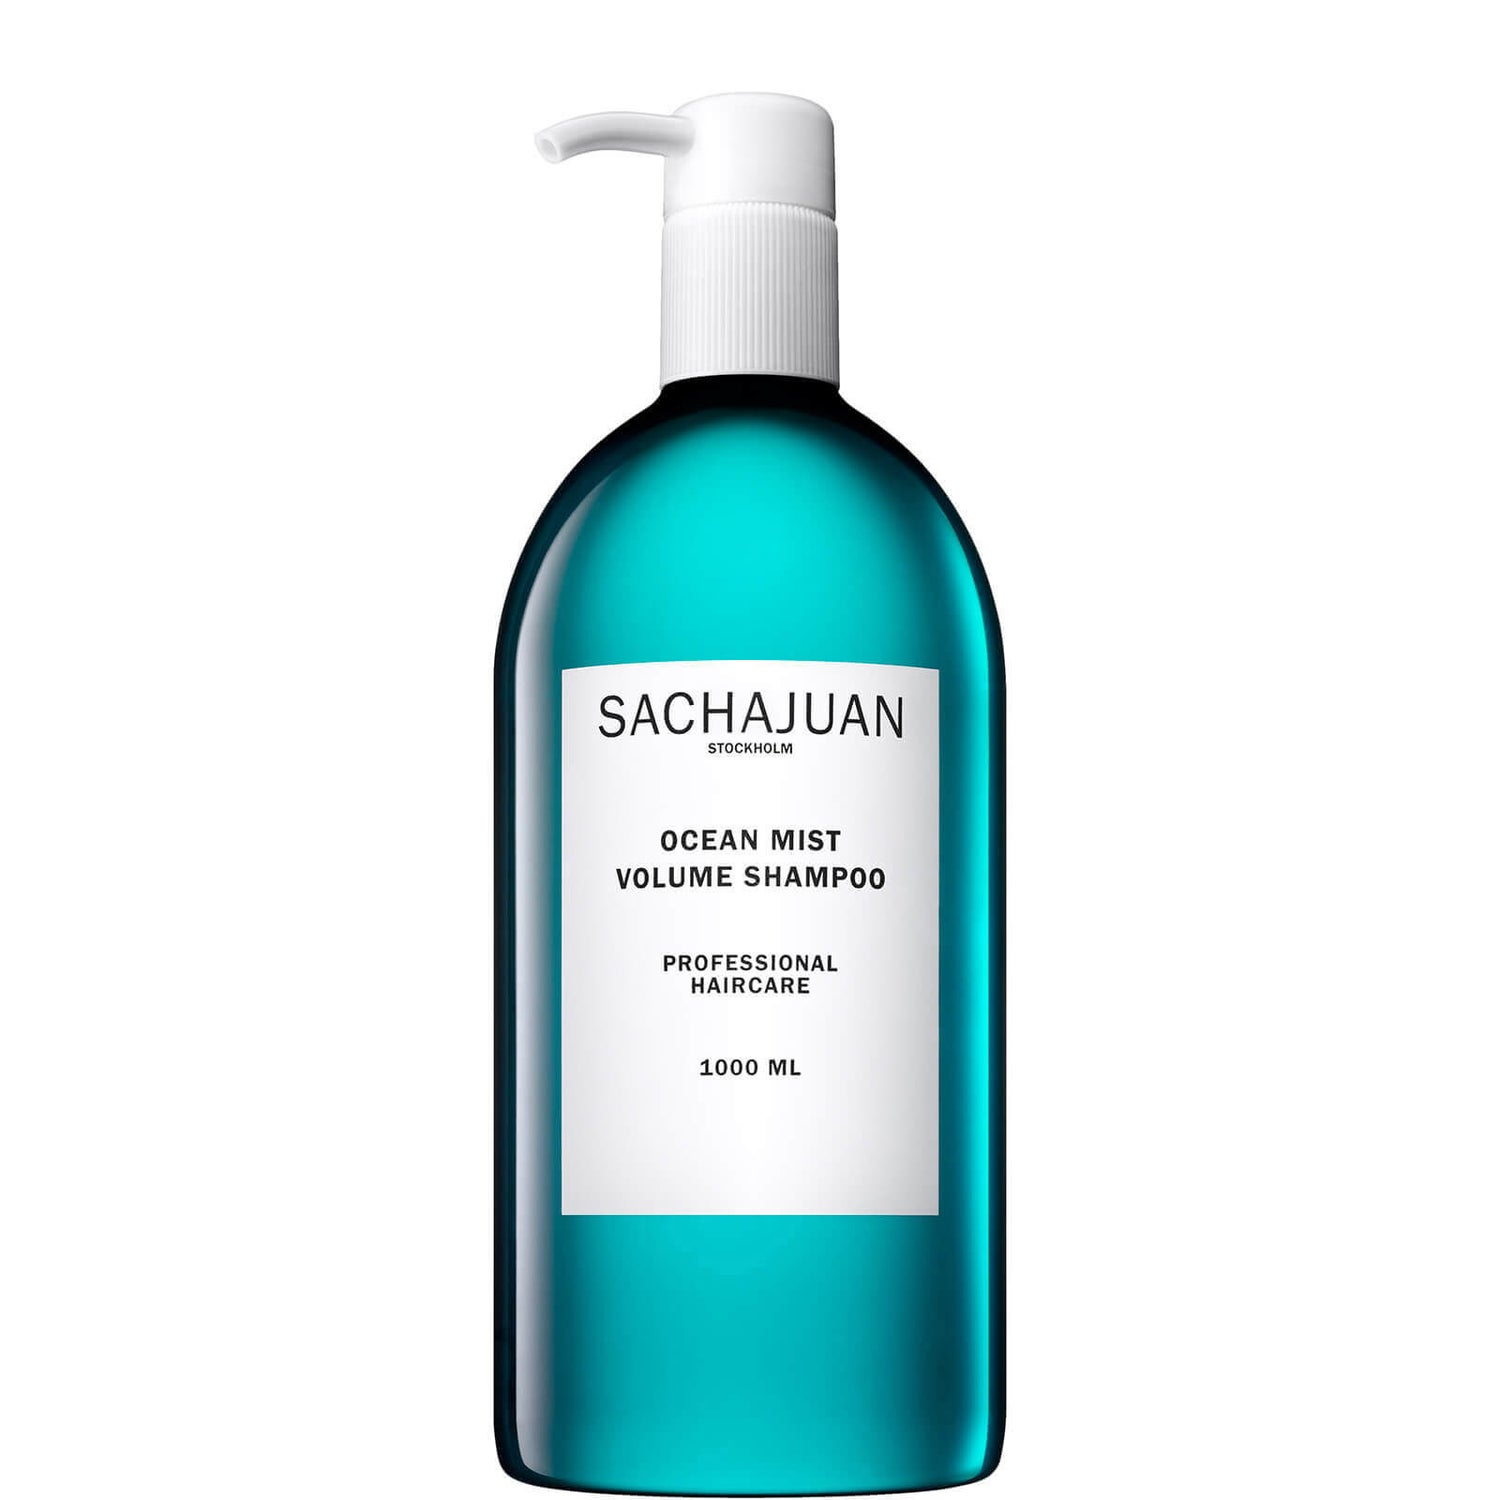 Sachajuan Ocean Mist Volume Shampoo 1000ml